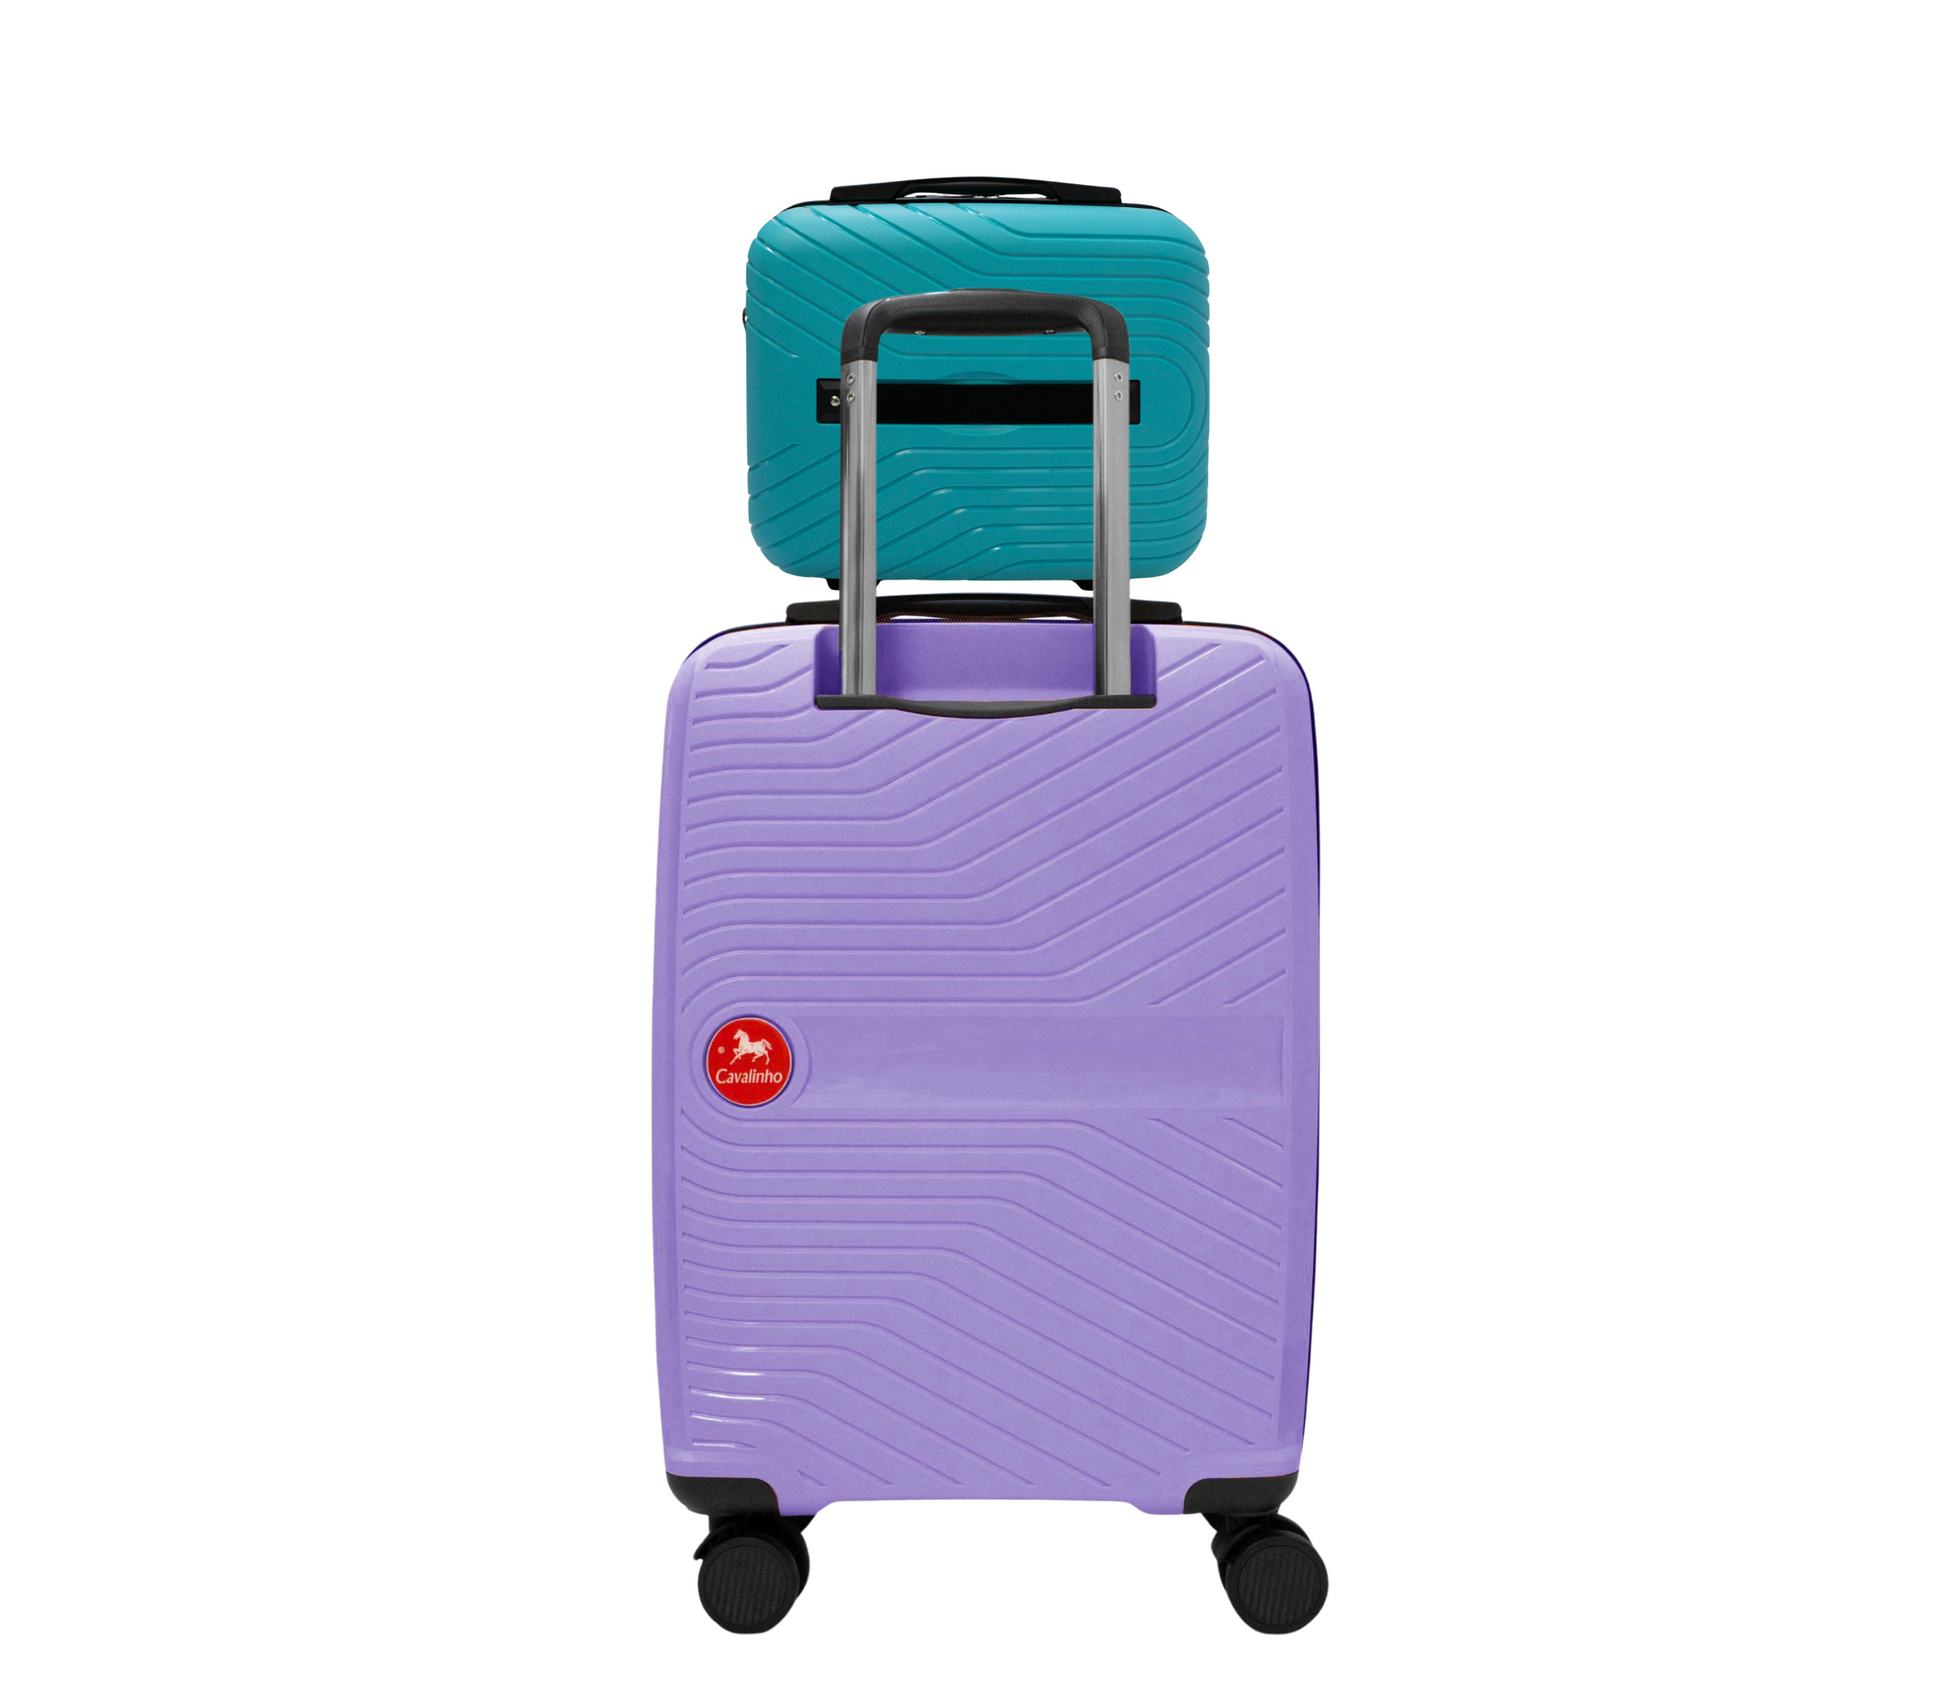 Cavalinho Colorful 2 Piece Luggage Set (15" & 19") - DarkTurquoise Lilac - 68020004.2539.S1519._2